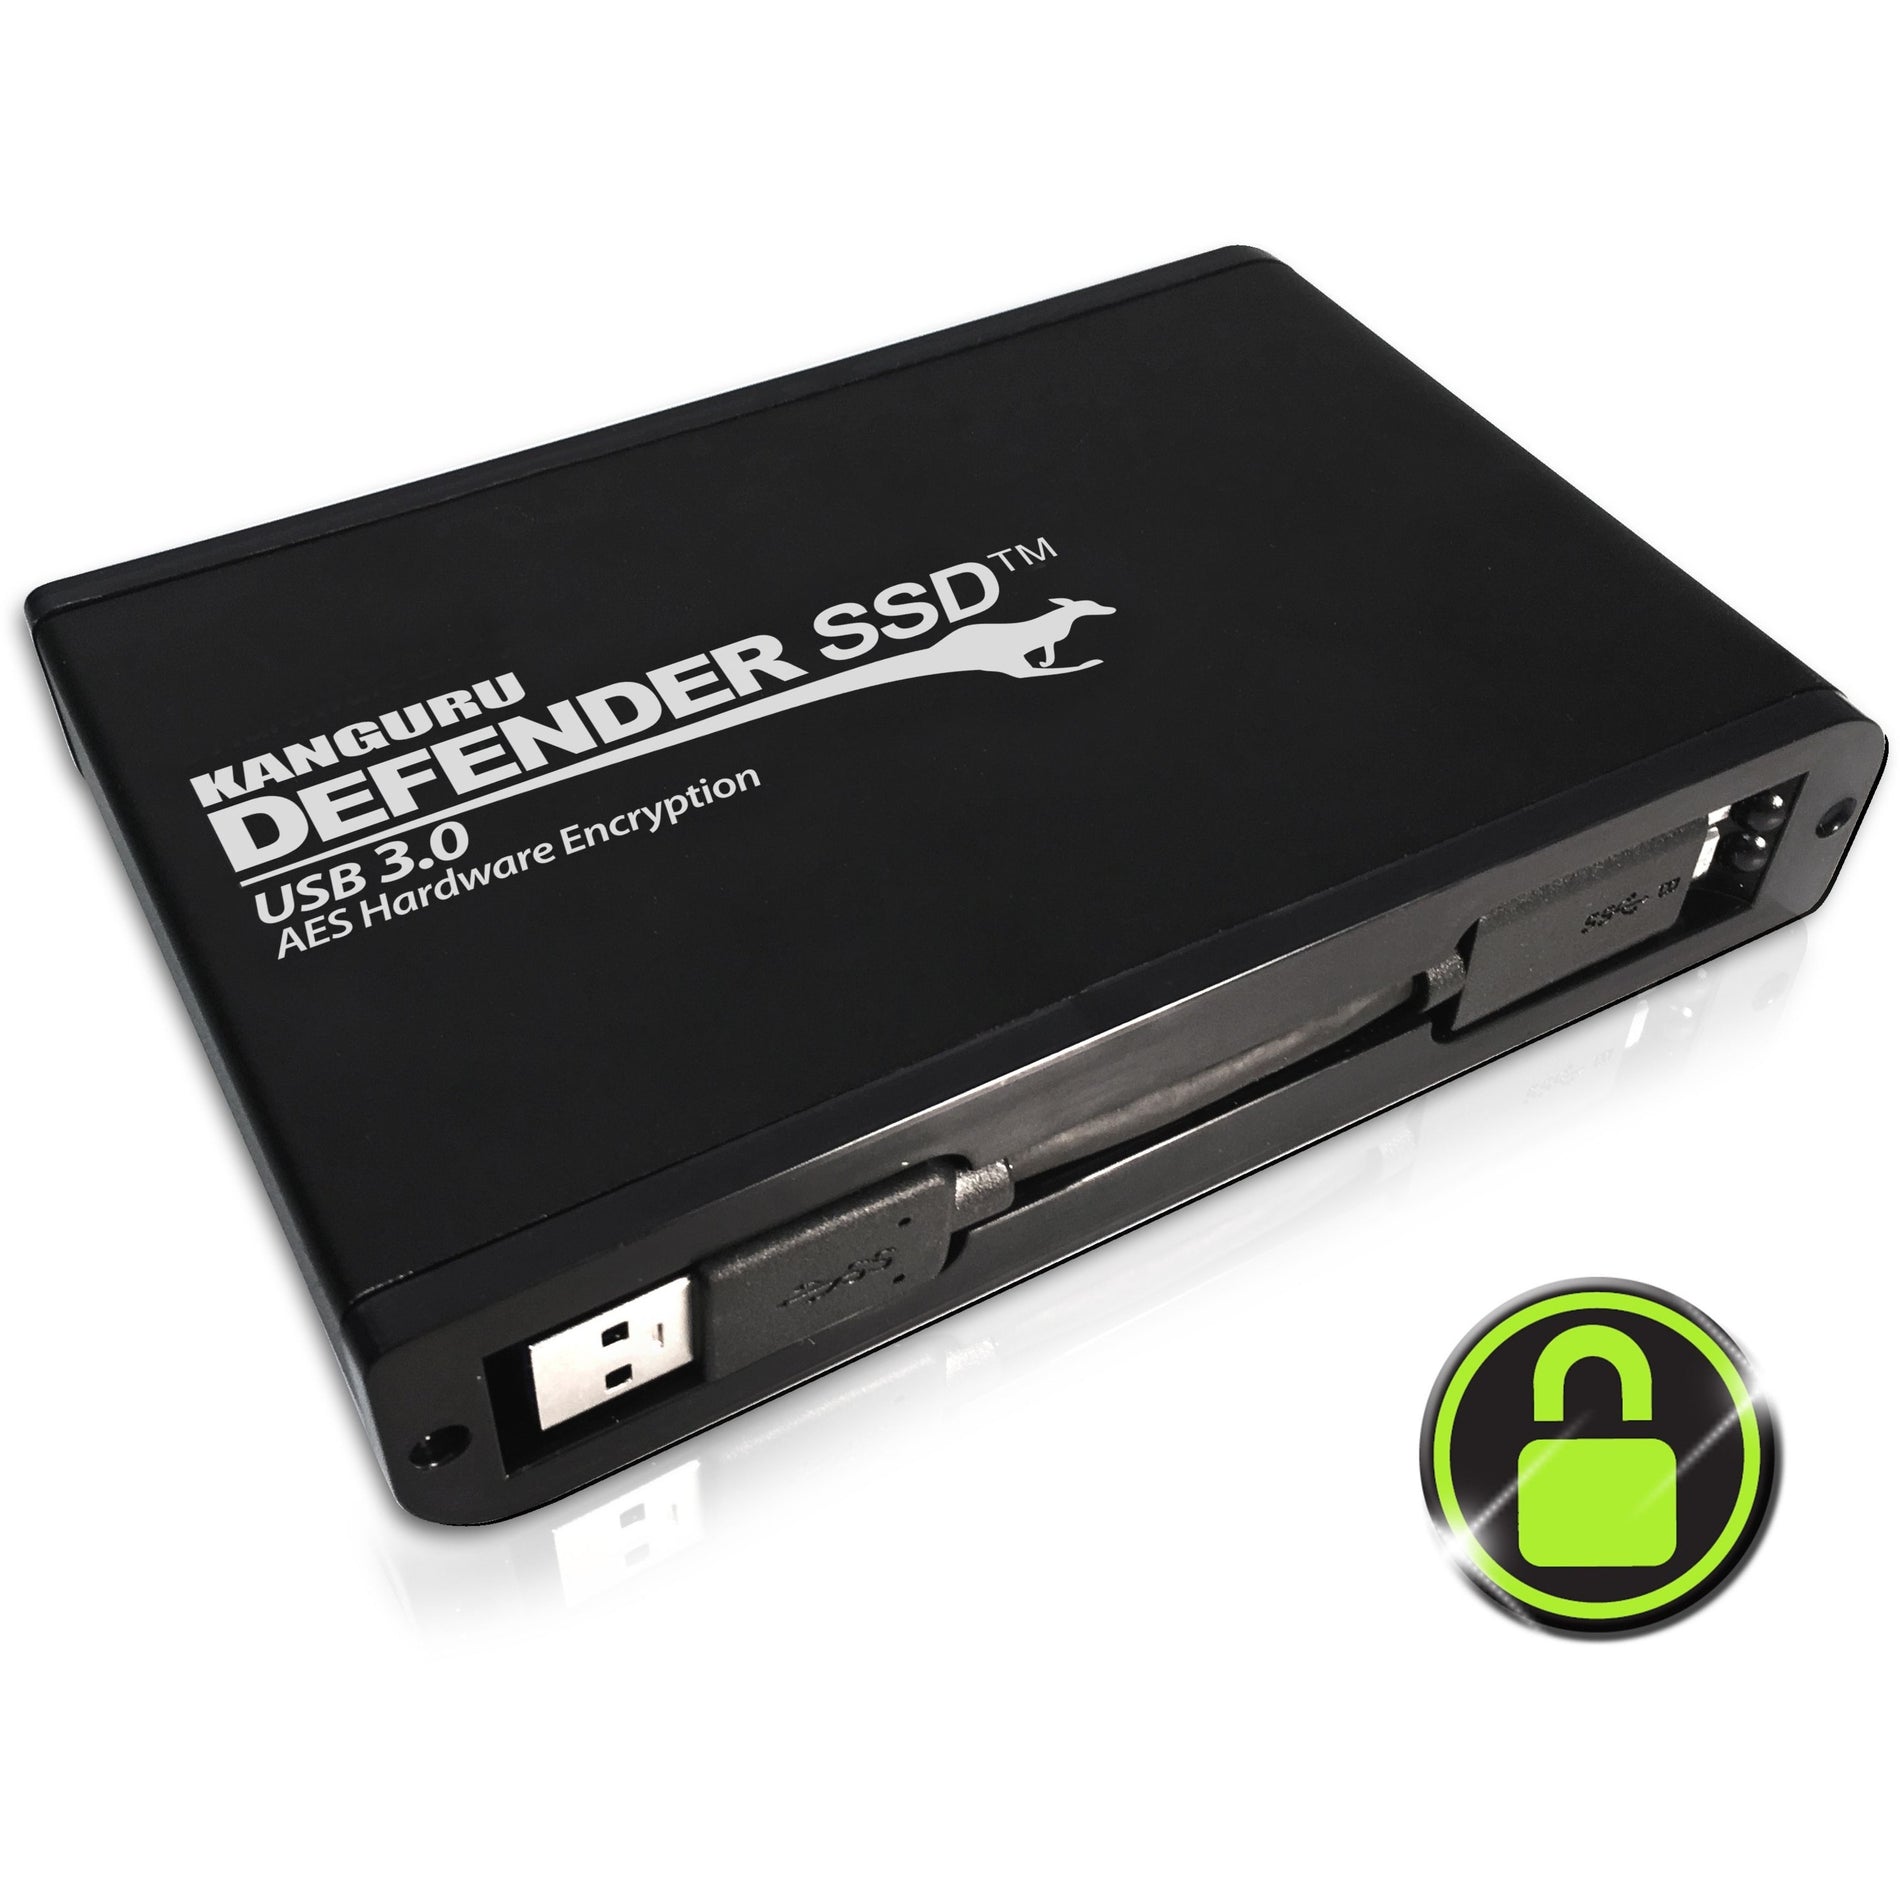 Kanguru KDH3B-35-2TSSD Defender SSD 35, 2TB, 256-Bit Hardware Encrypted External Solid State Drive